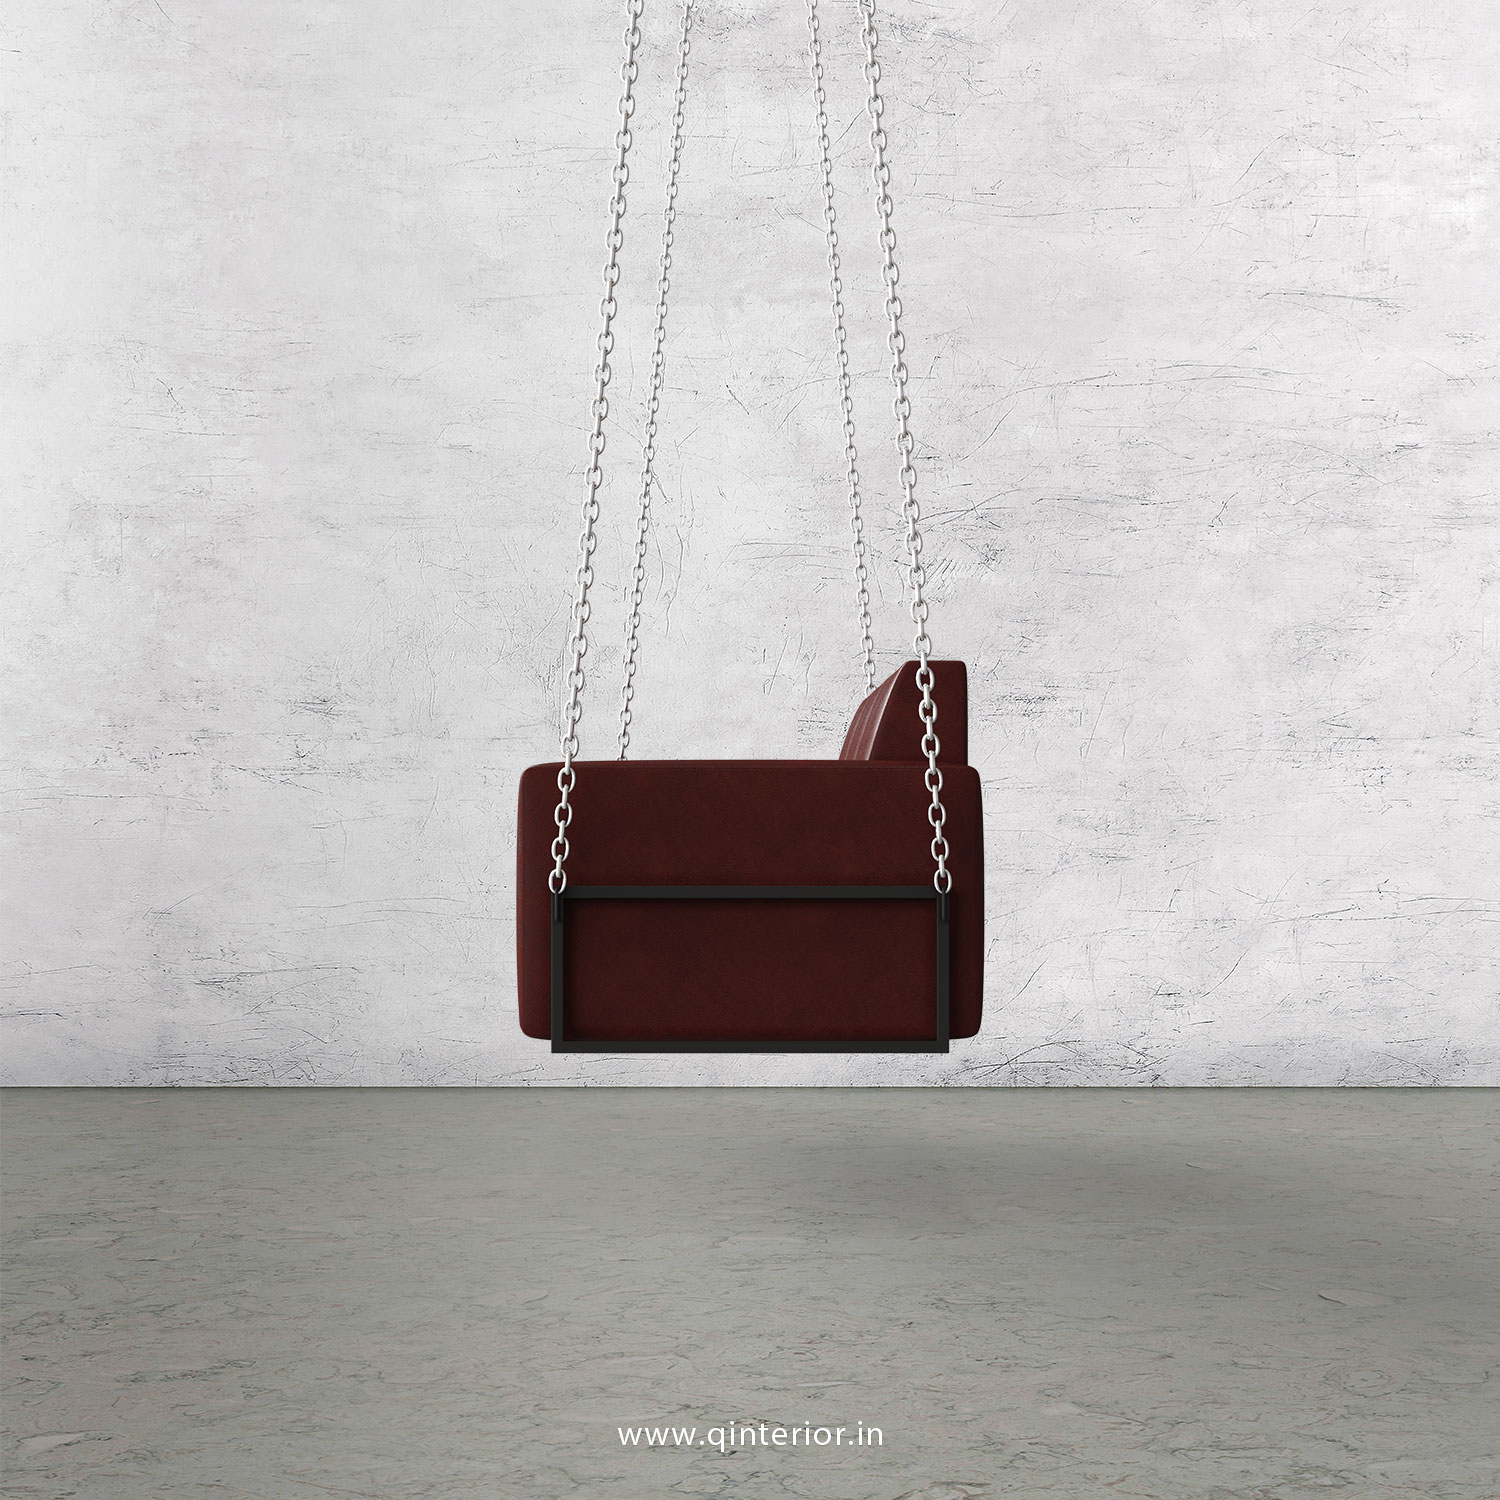 NIRVANA 3 Seater Swing Sofa in Fab Leather Fabric - SSF001 FL08